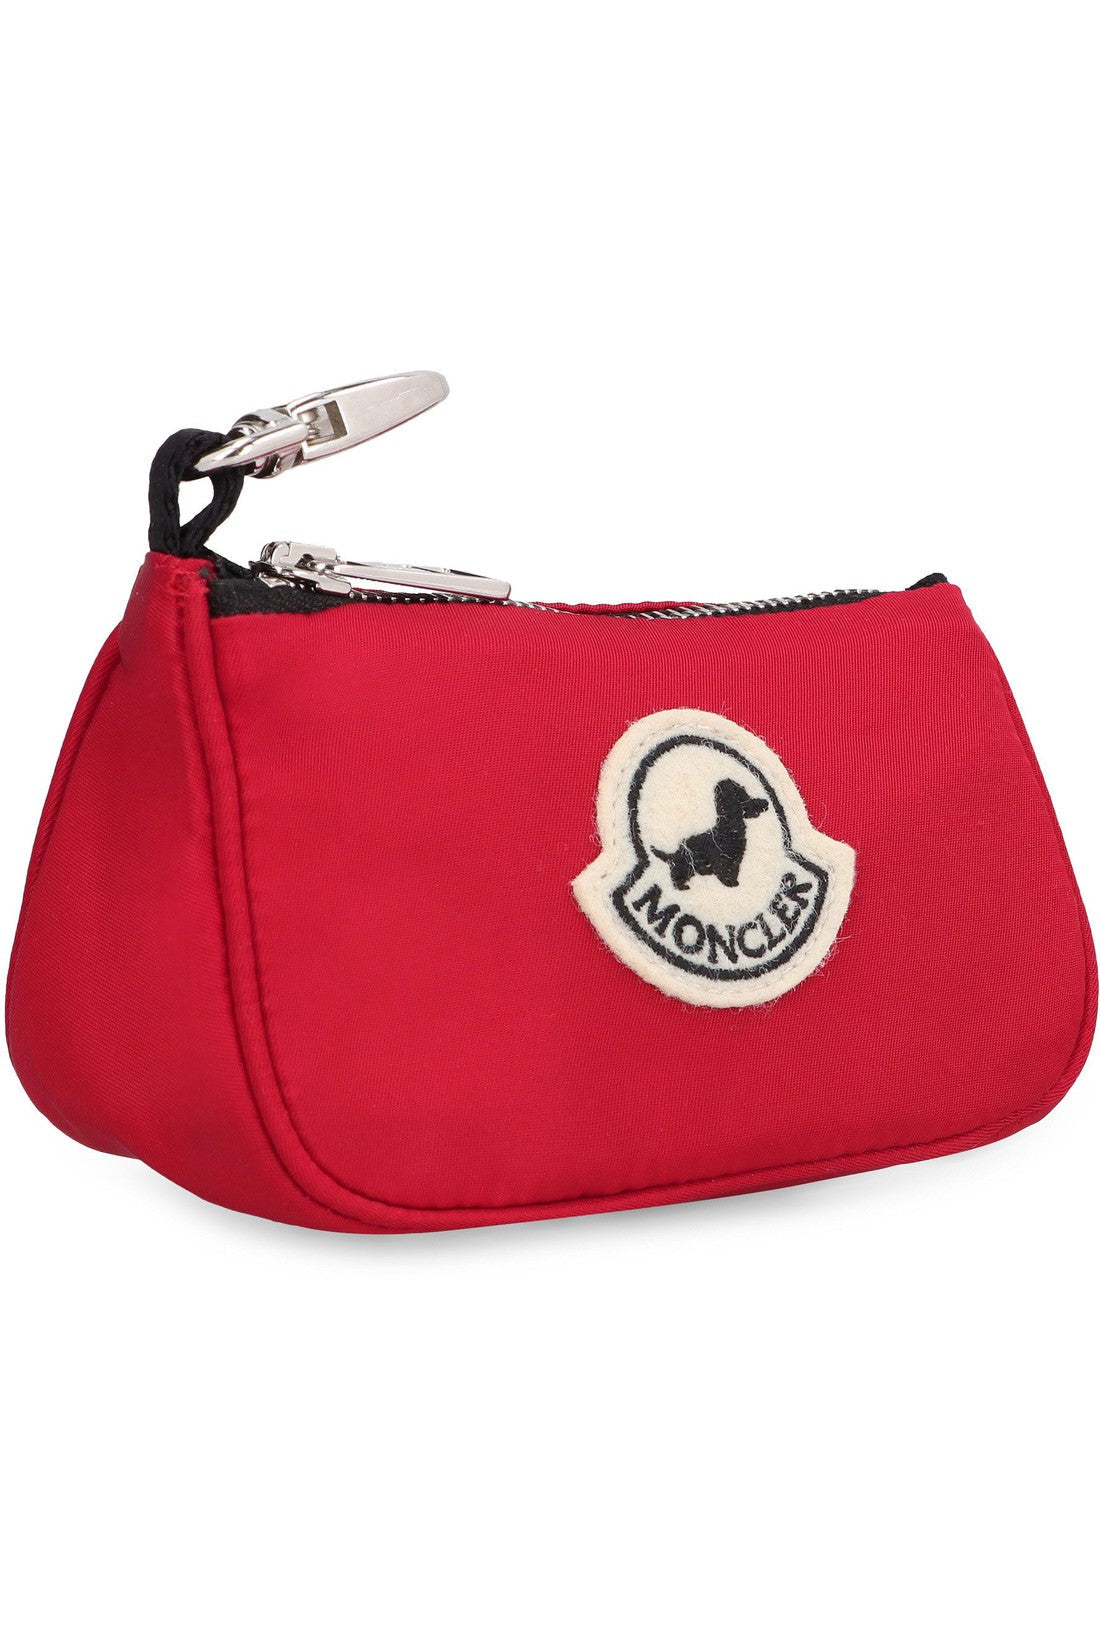 Moncler Genius-OUTLET-SALE-Moncler & Poldo Dog Couture - Satin bag holder-ARCHIVIST